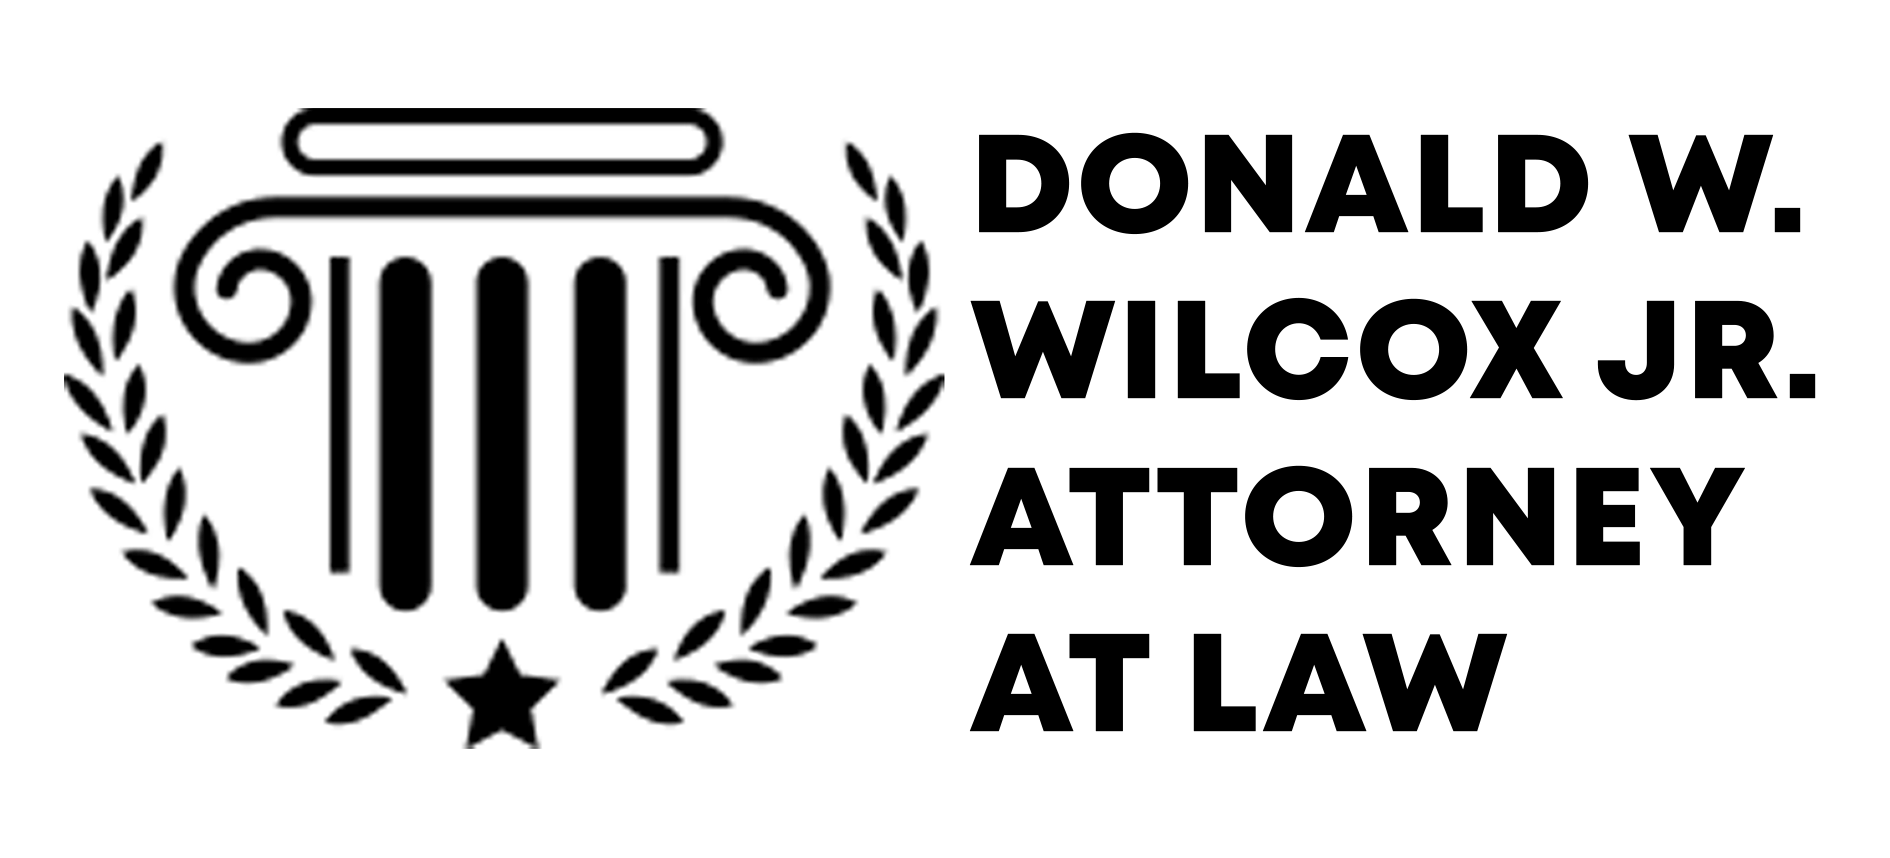 Donald W. Wilcox Jr. Attorney at Law Logo